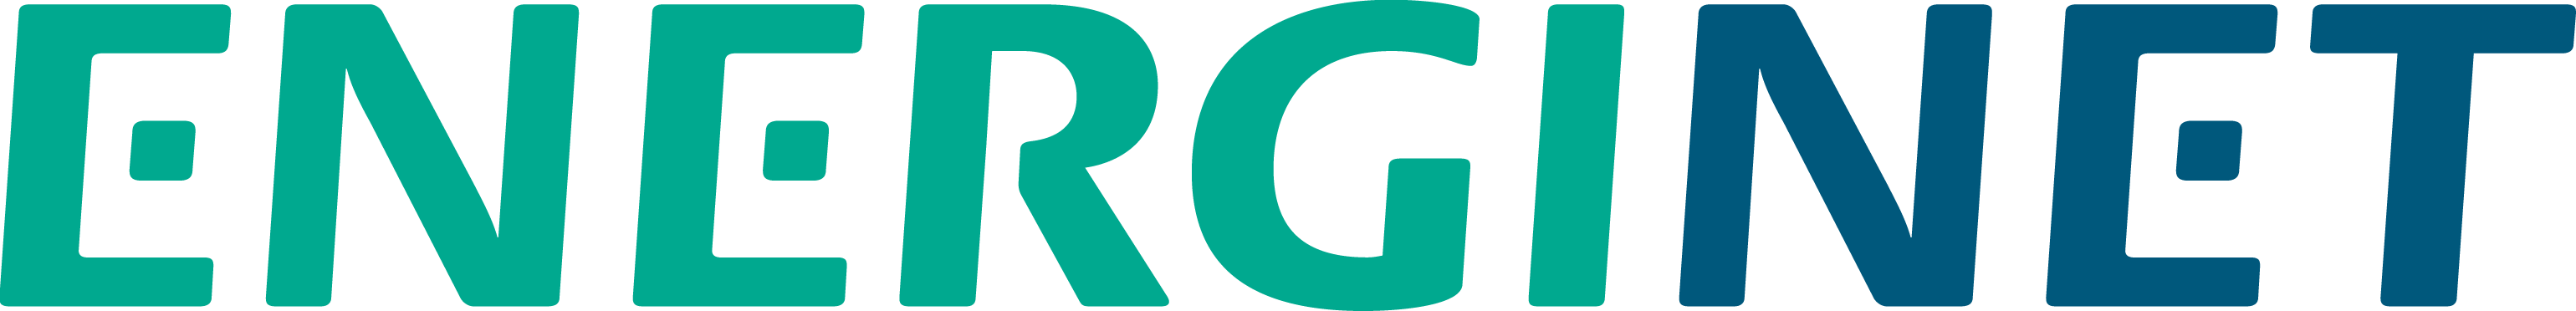 Energinet Logo